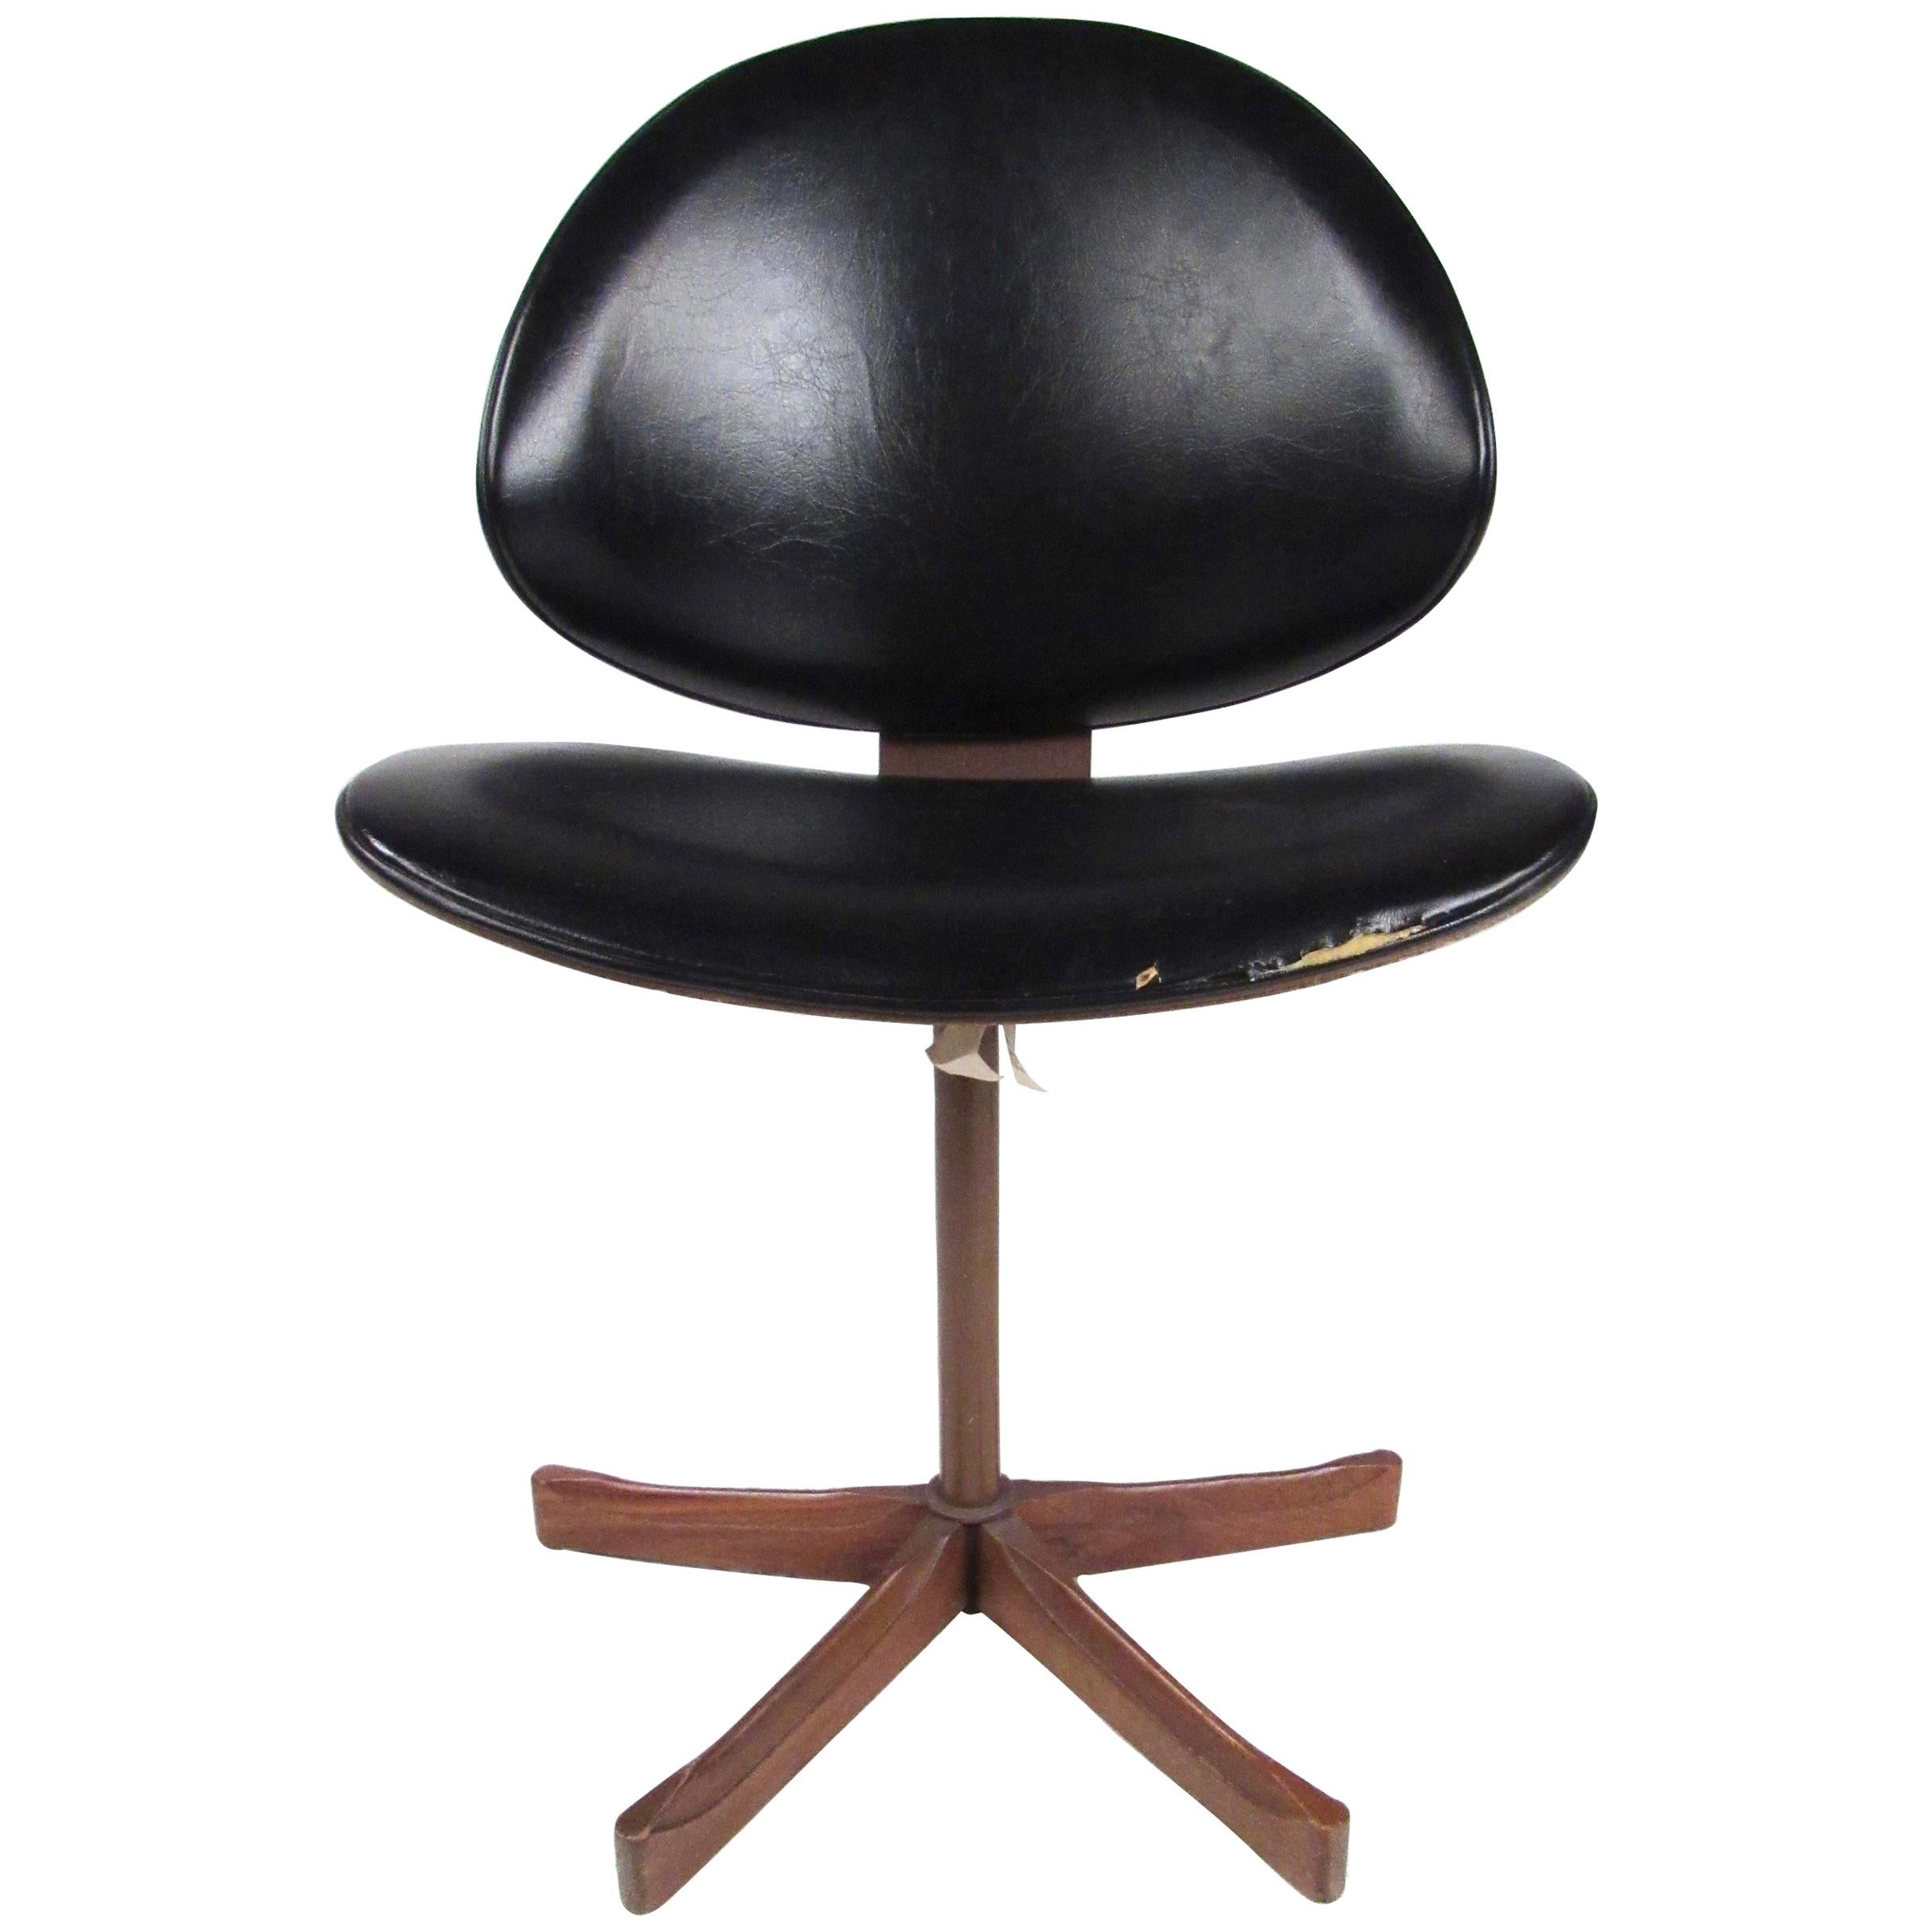 Mid-Century Modern Bentwood Teak Side Chair by Kodawood